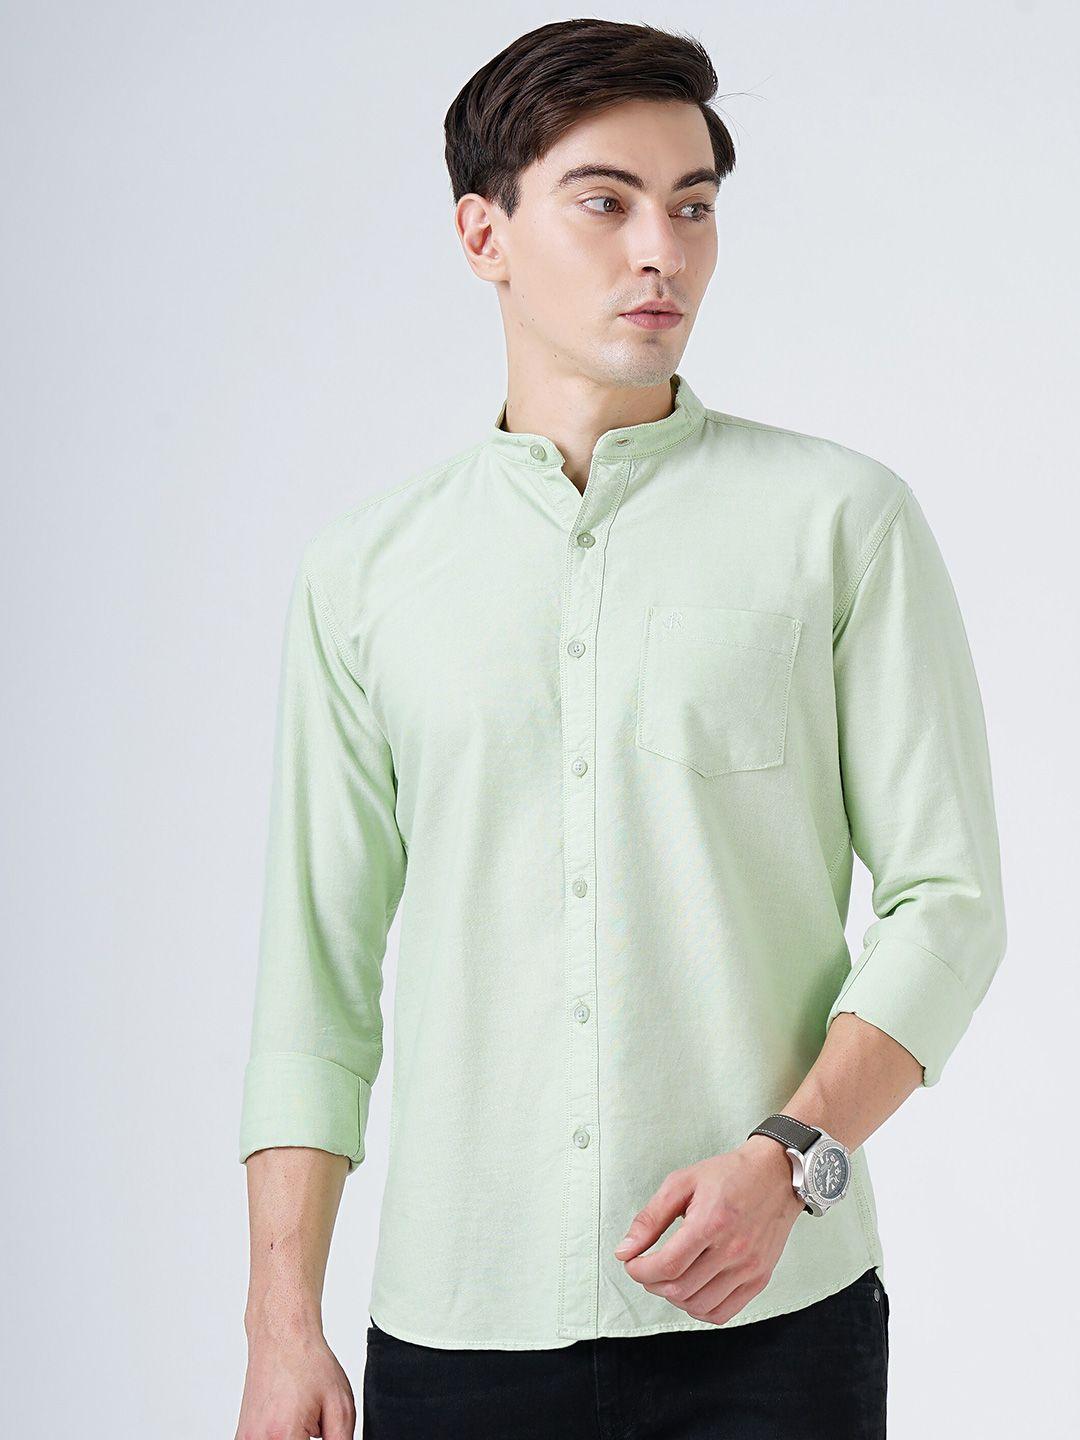 soratia men green slim fit casual shirt